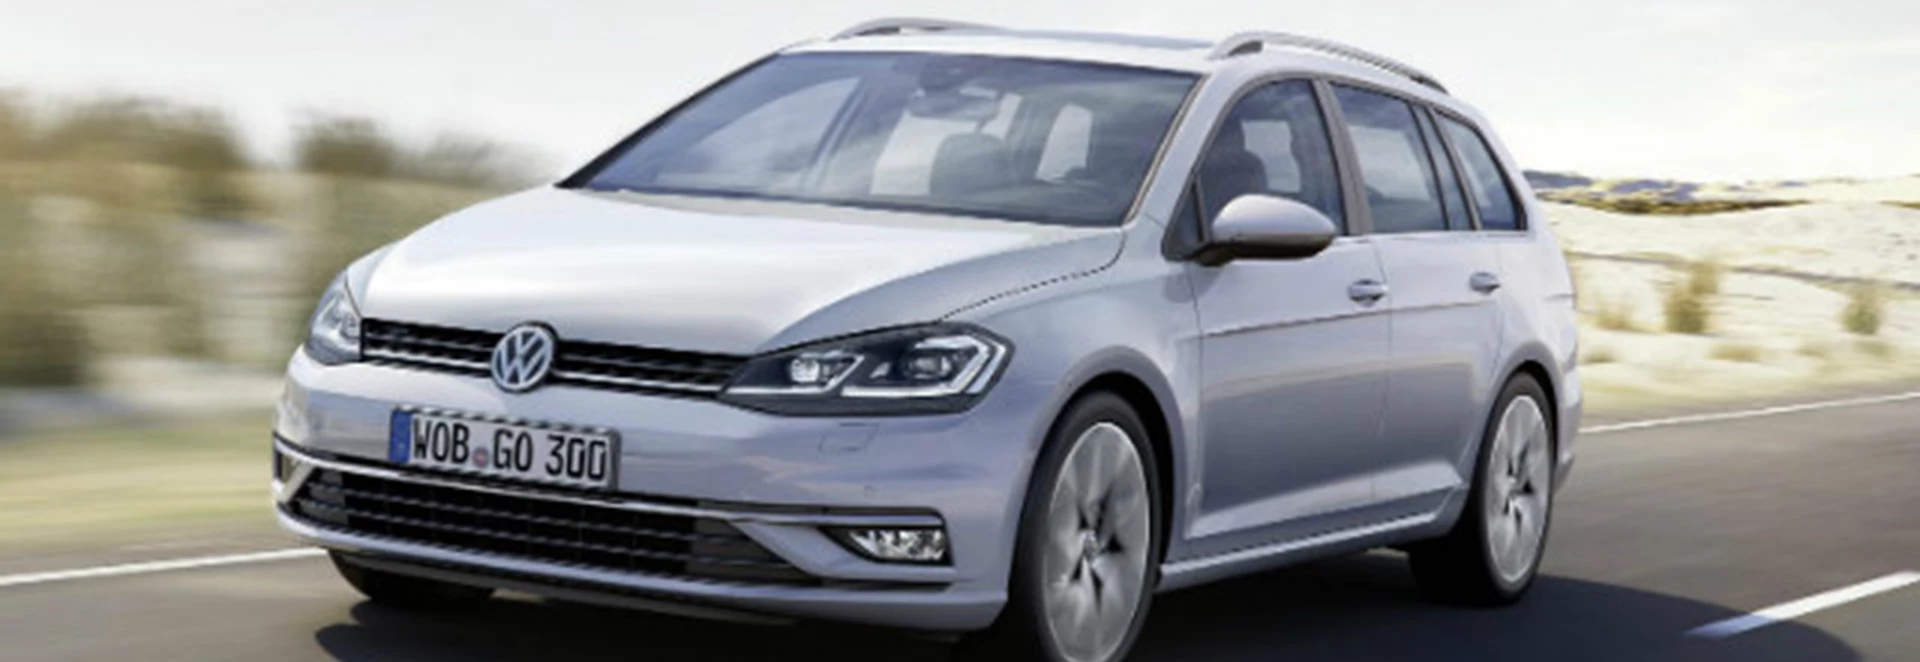 Volkswagen set to launch ten models next year, revamp entire range by 2020